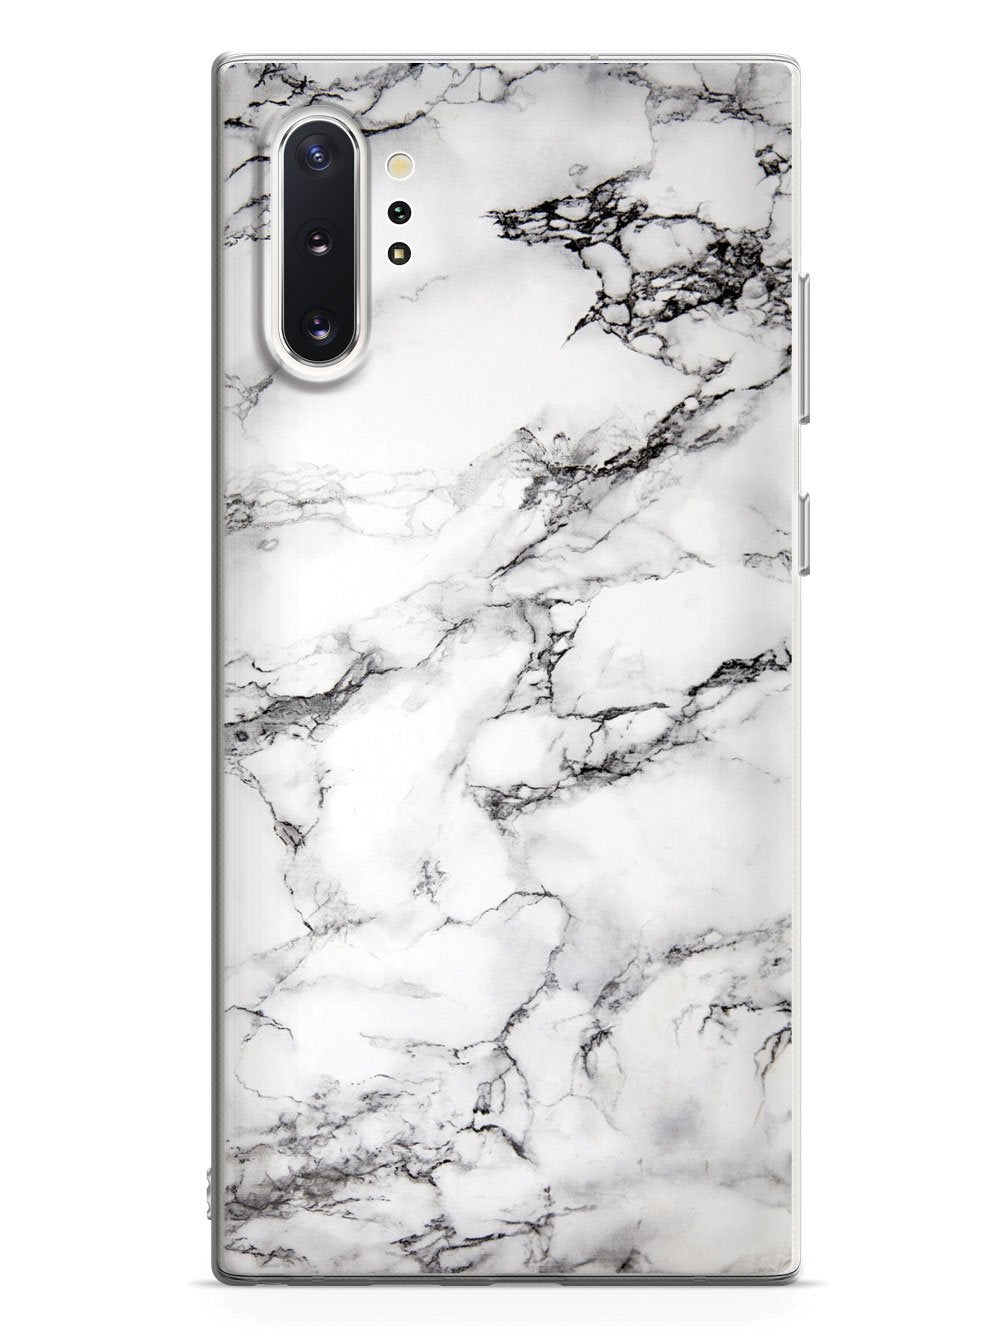 Textured Marble - Black & White Case